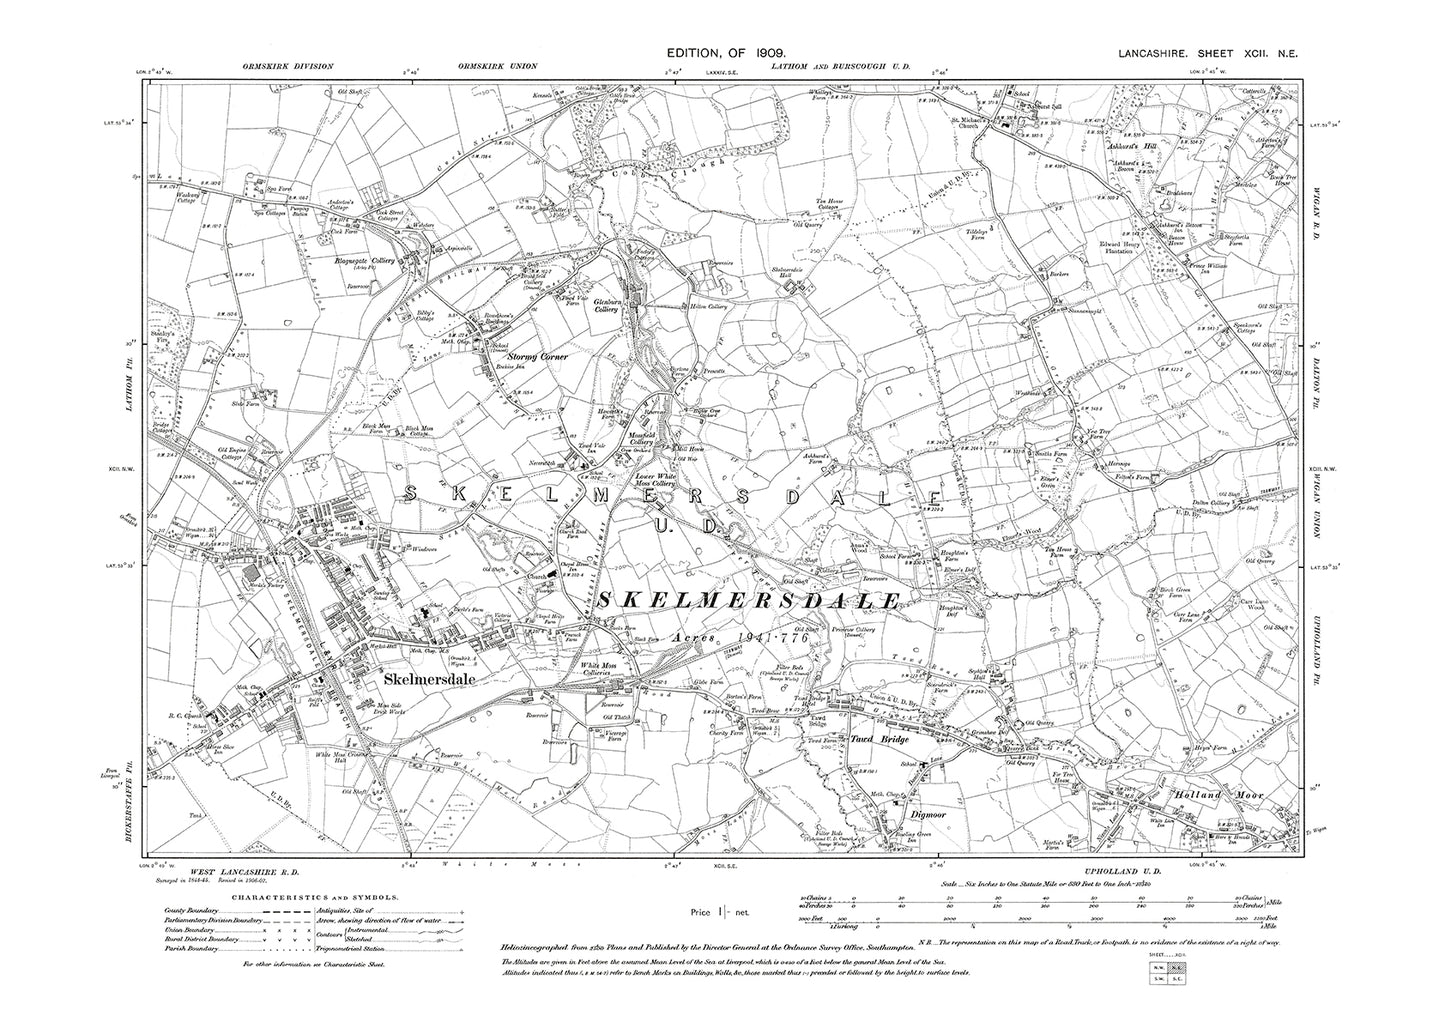 Skelmersdale - Lancashire in 1909 : 92NE